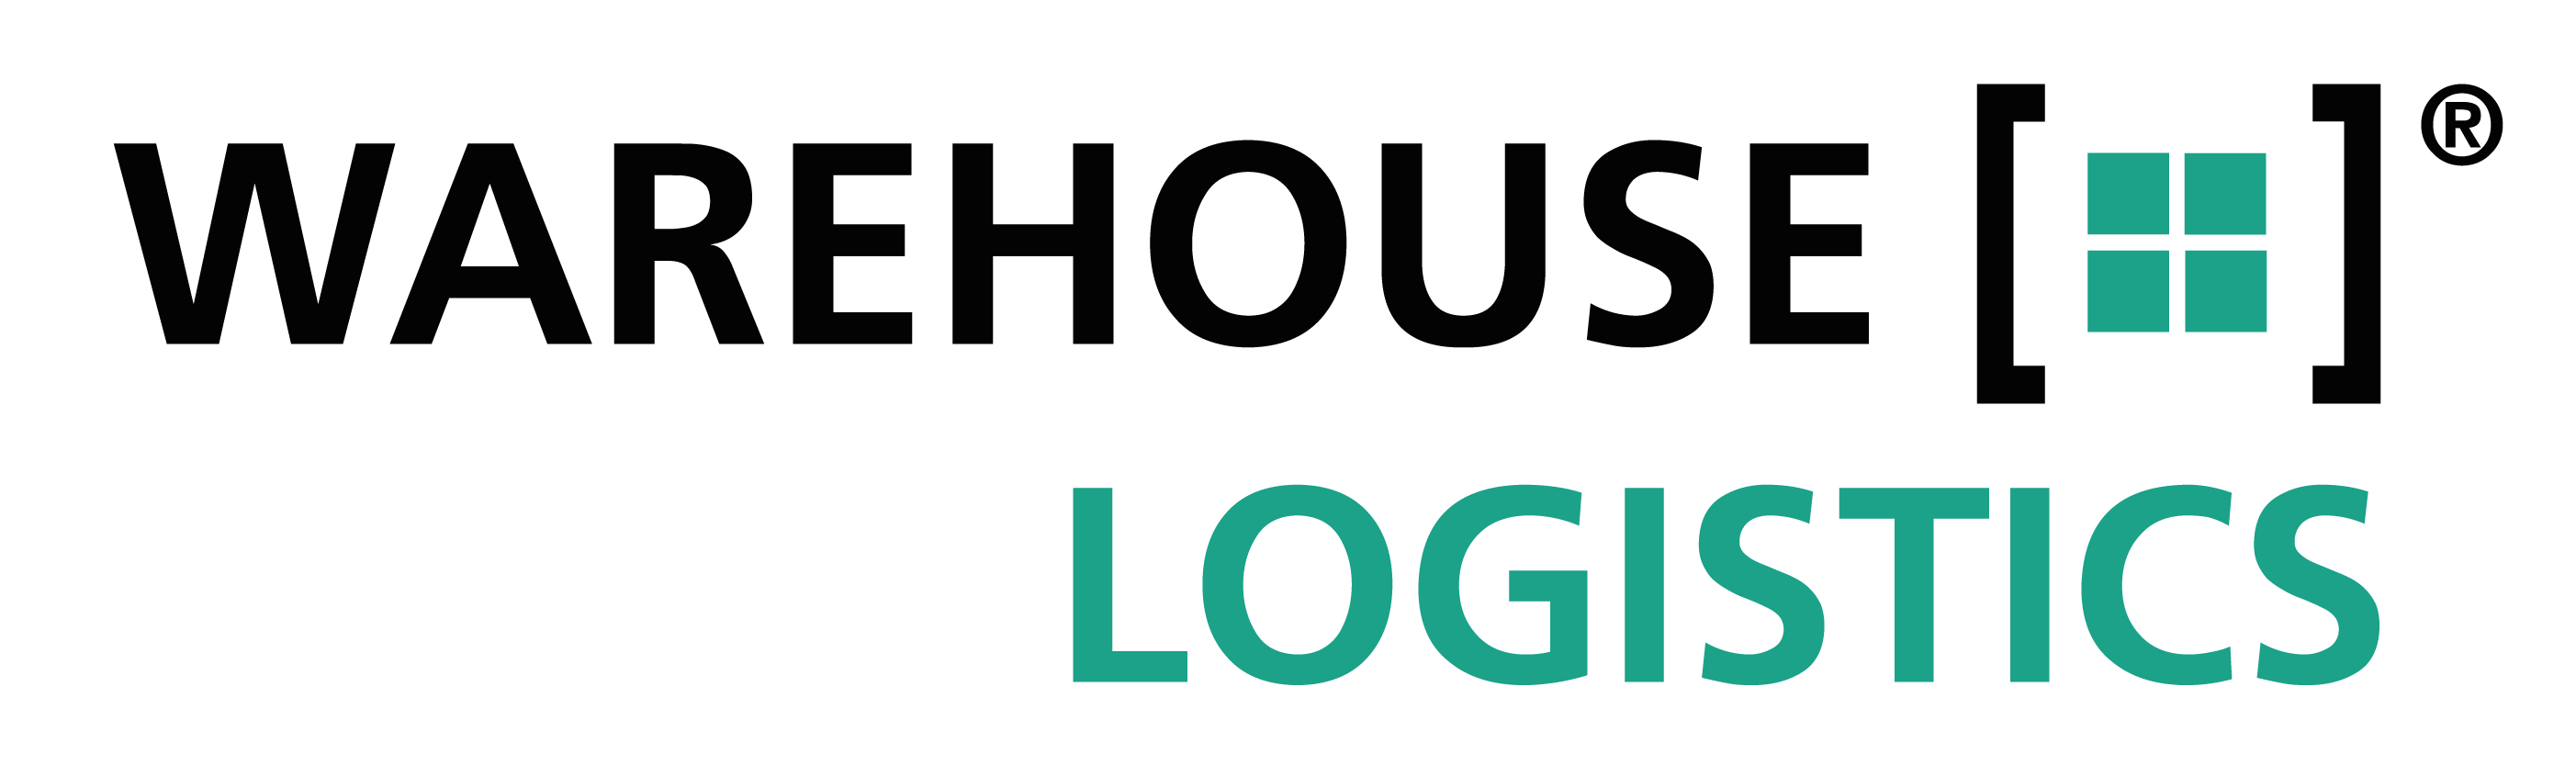 warehouse-logistics: Registrierung Premium